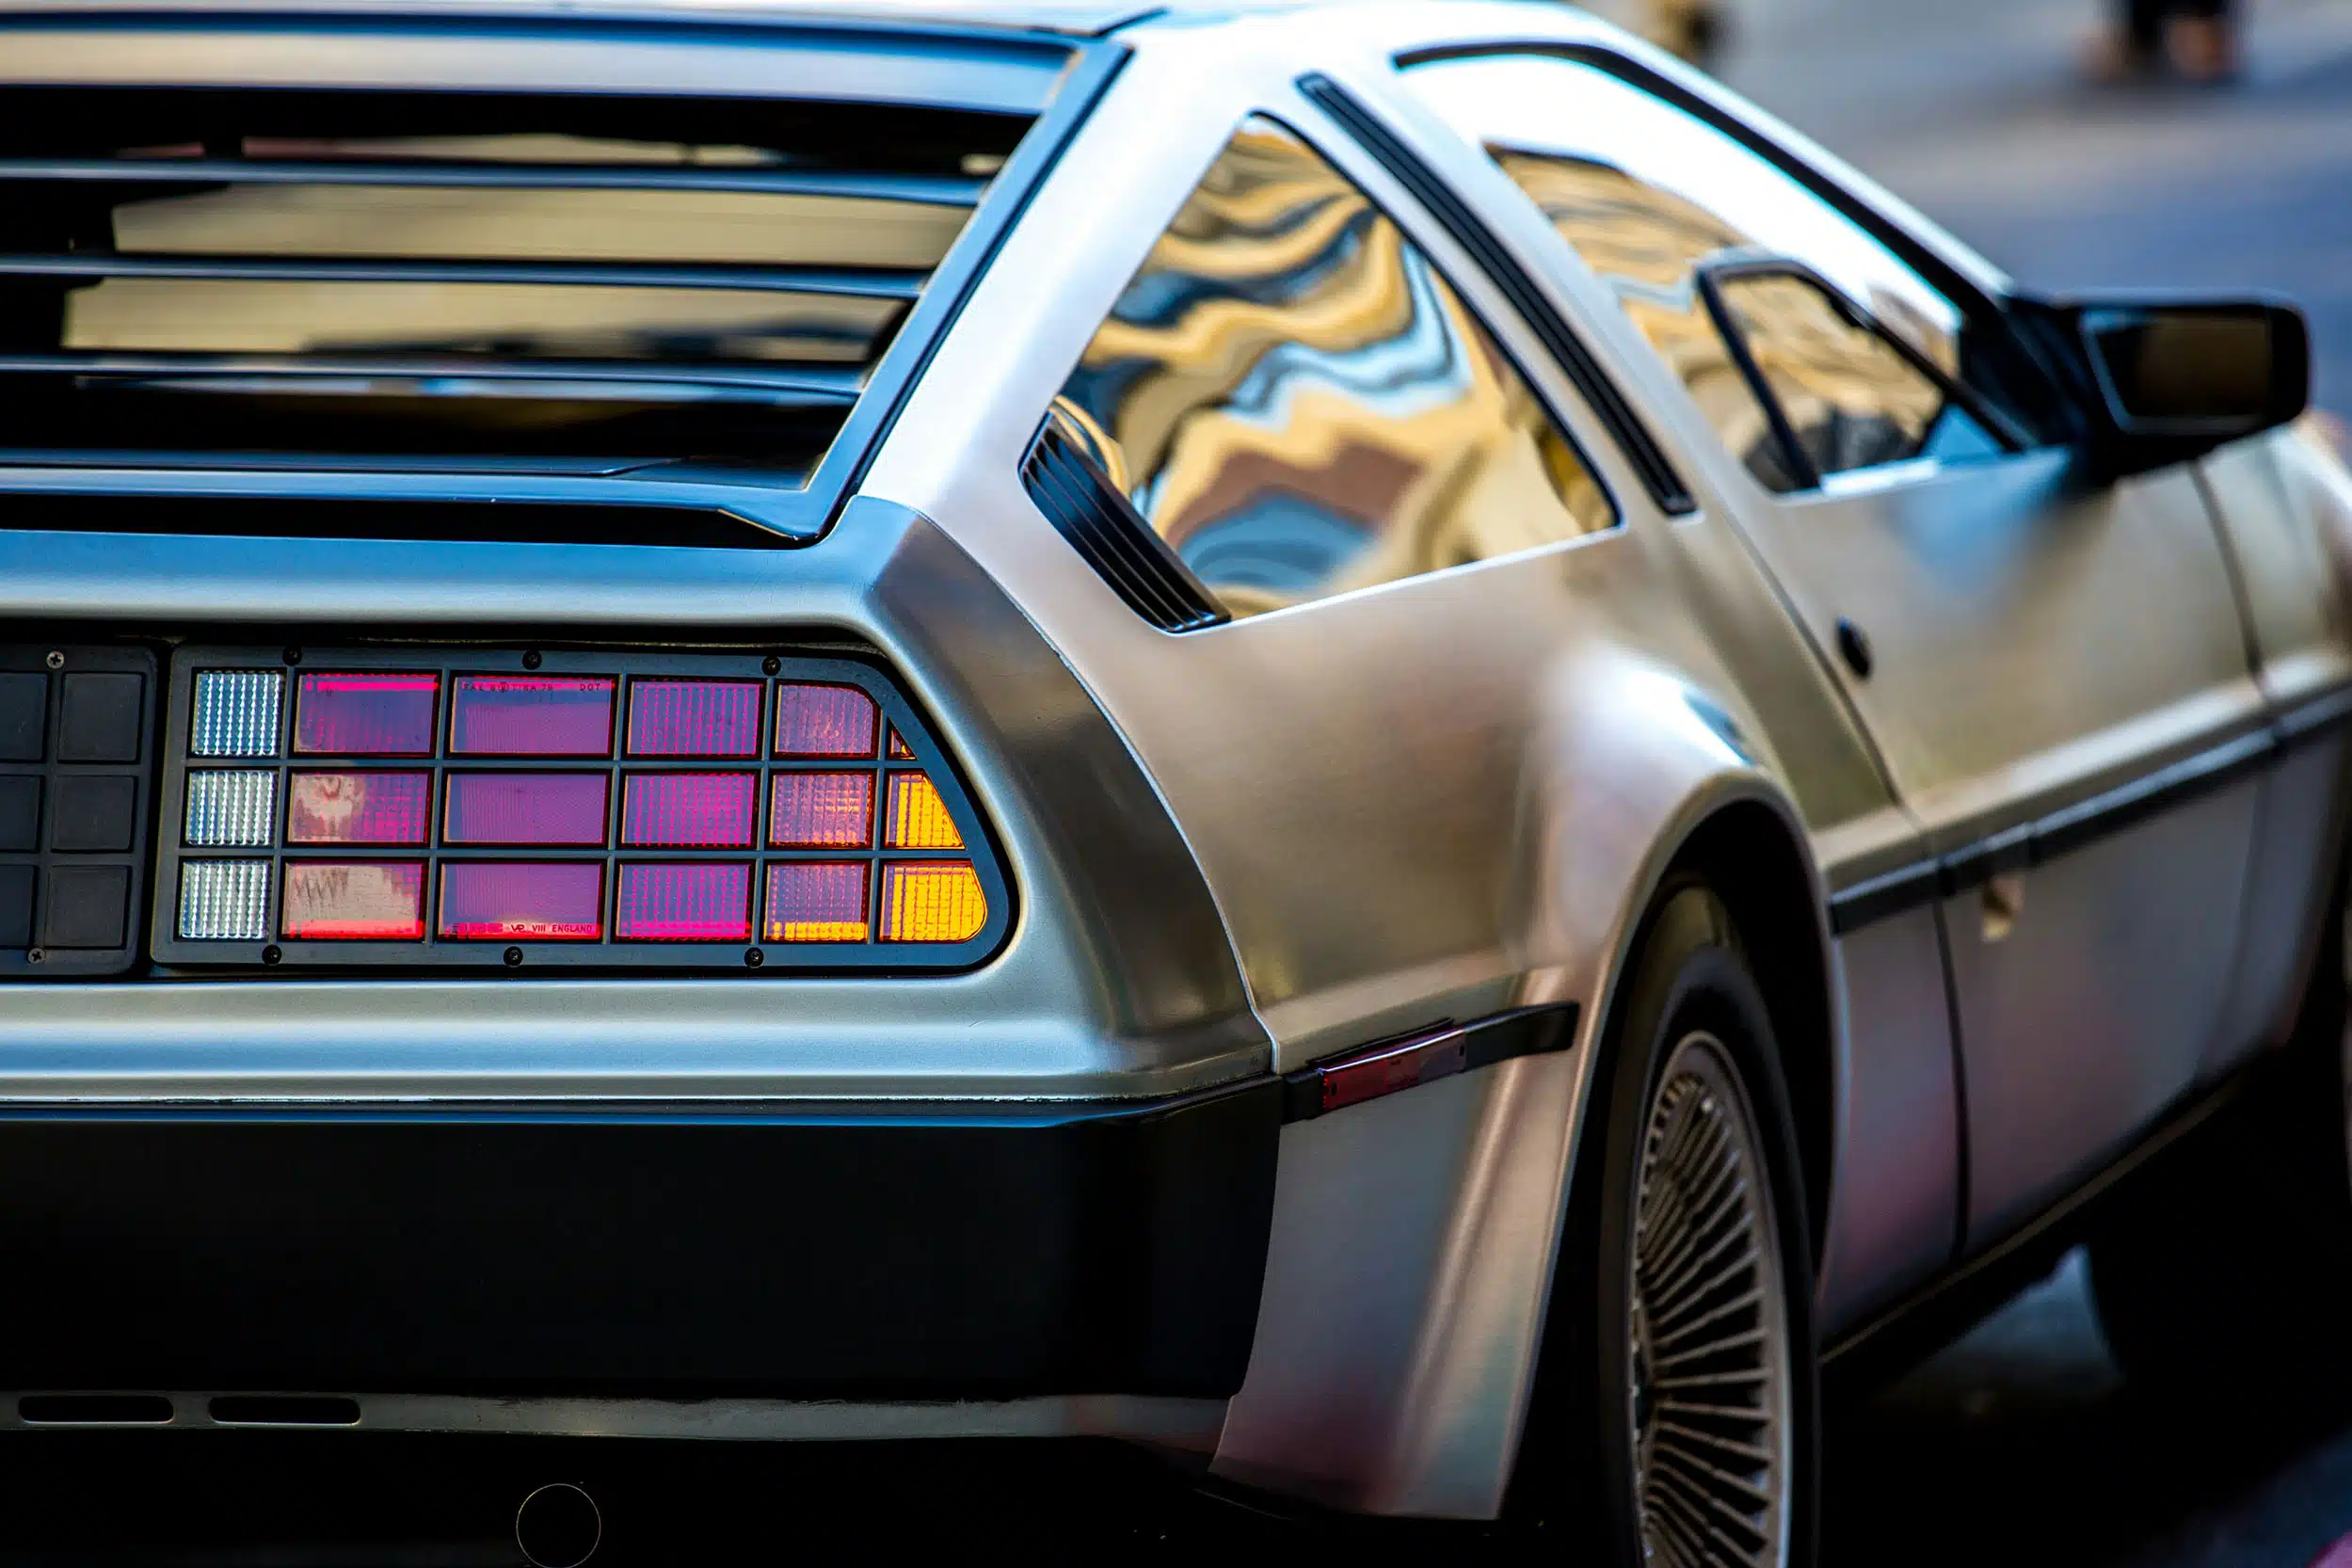 Close up of DeLorean rear end